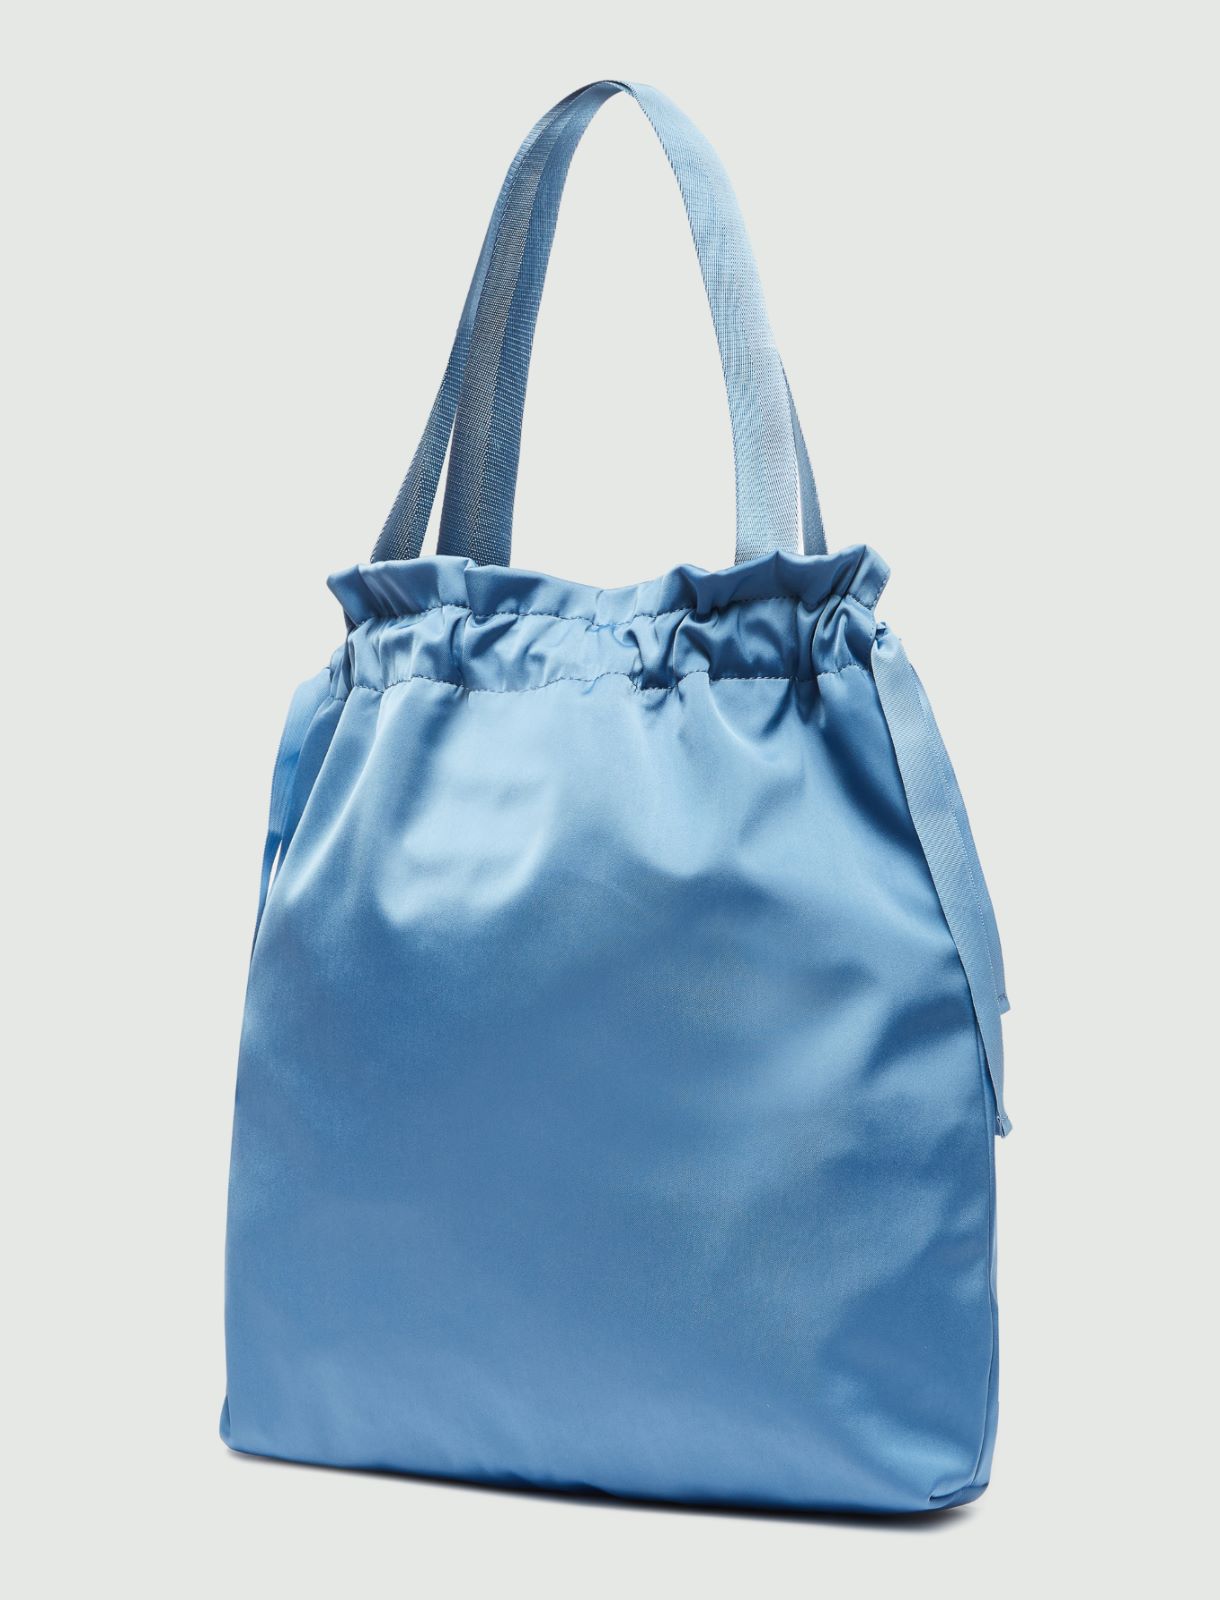 Shopping tote - Light blue - Marina Rinaldi - 2